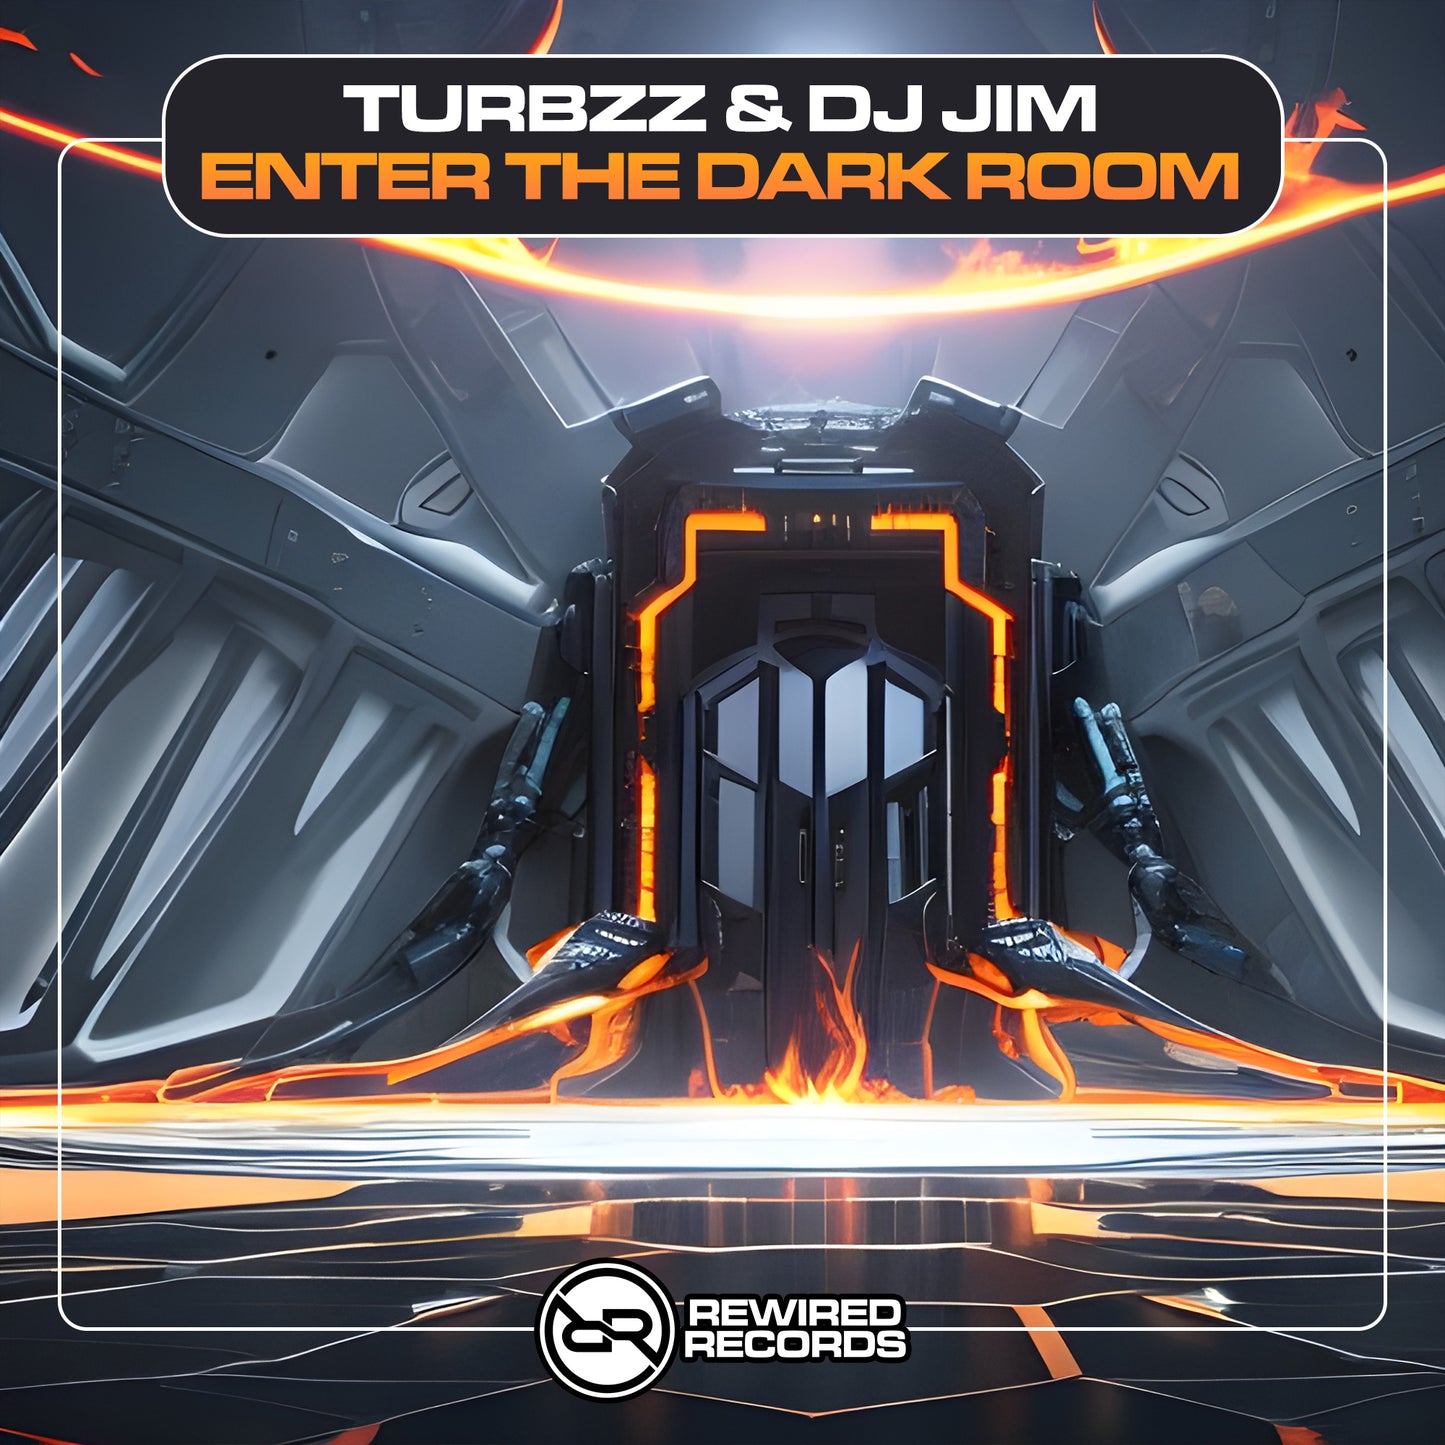 Turbzz & DJ Jim - Enter The Dark Room